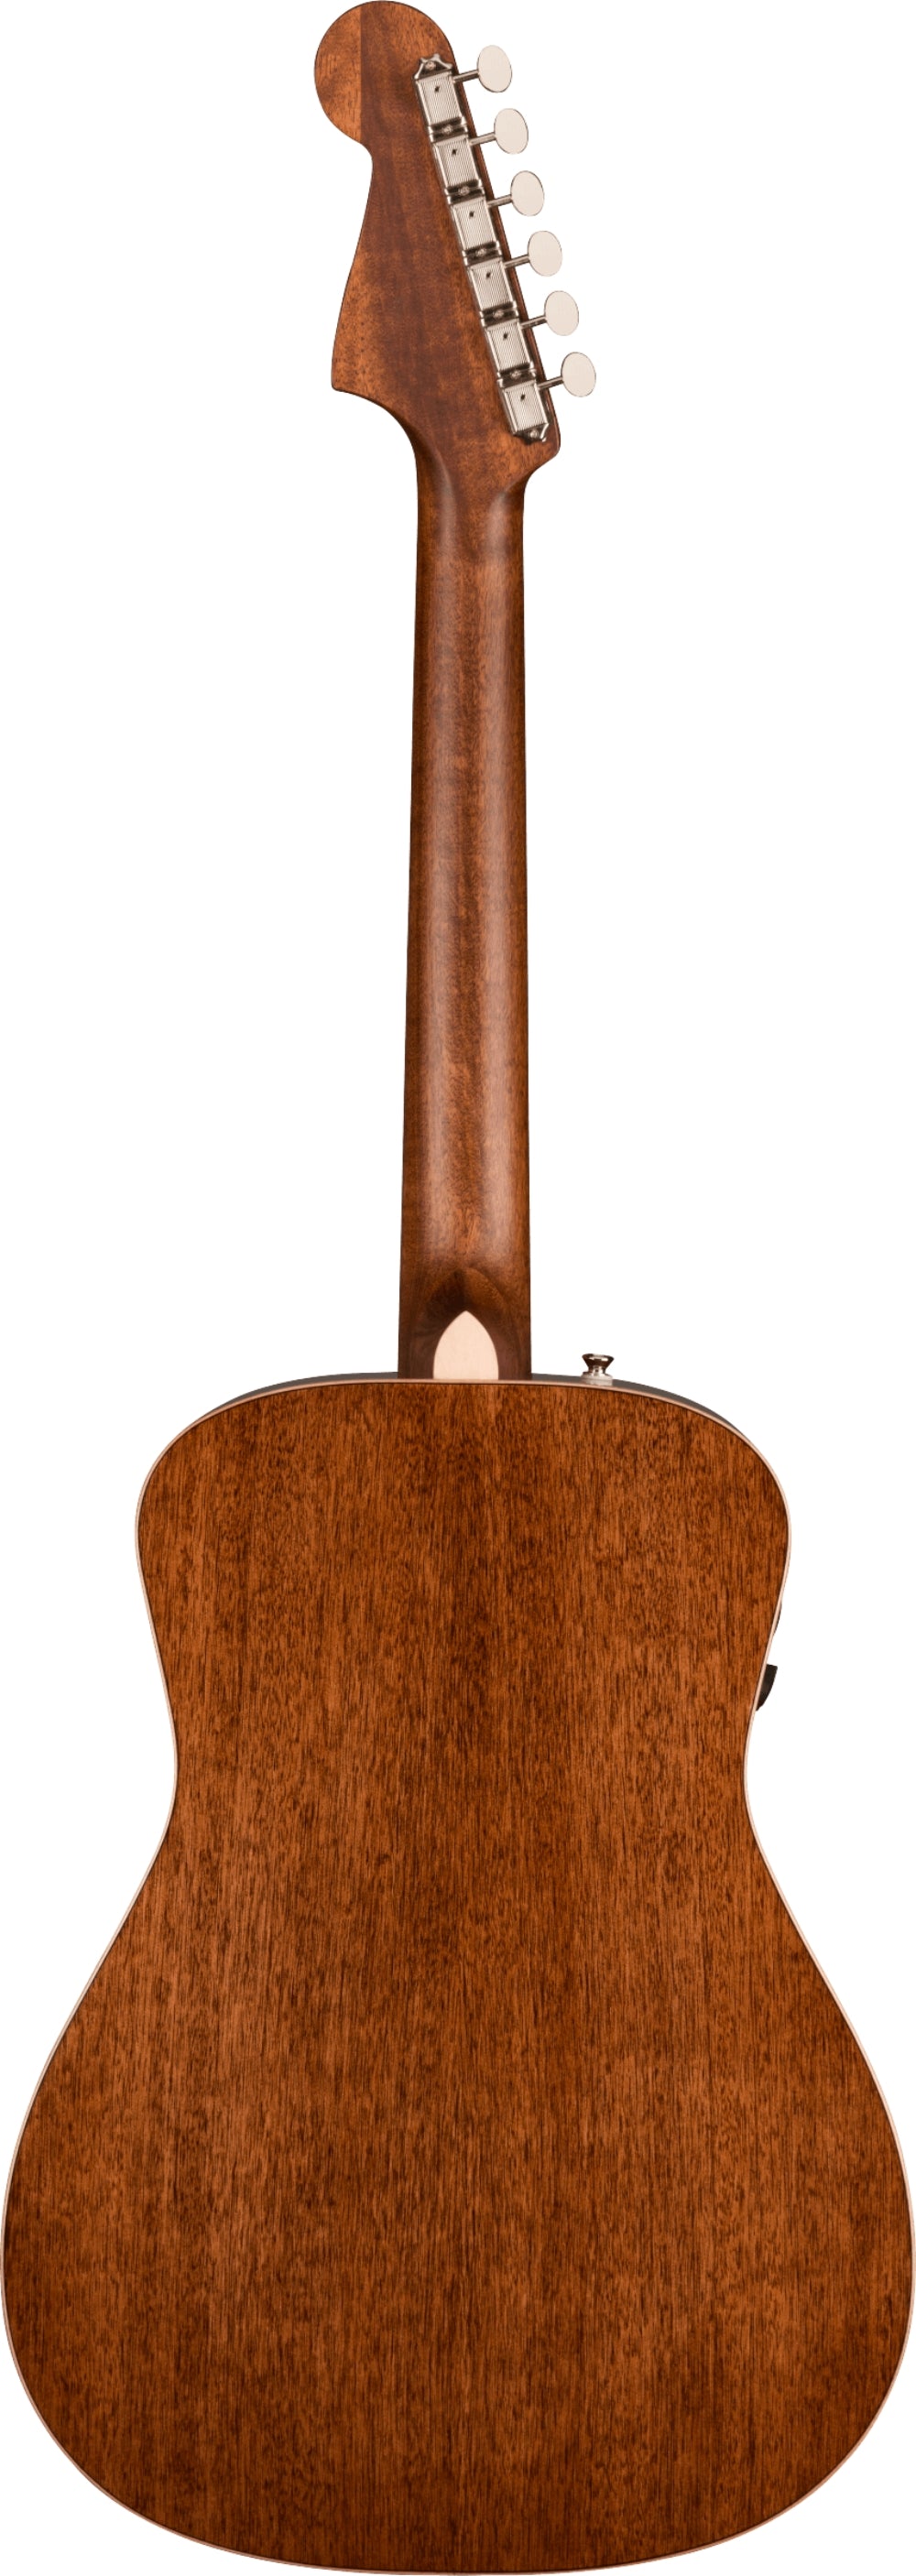 Fender - Malibu Classic - Pau Ferro Fingerboard - Aged Cognac Burst  097-0923-137